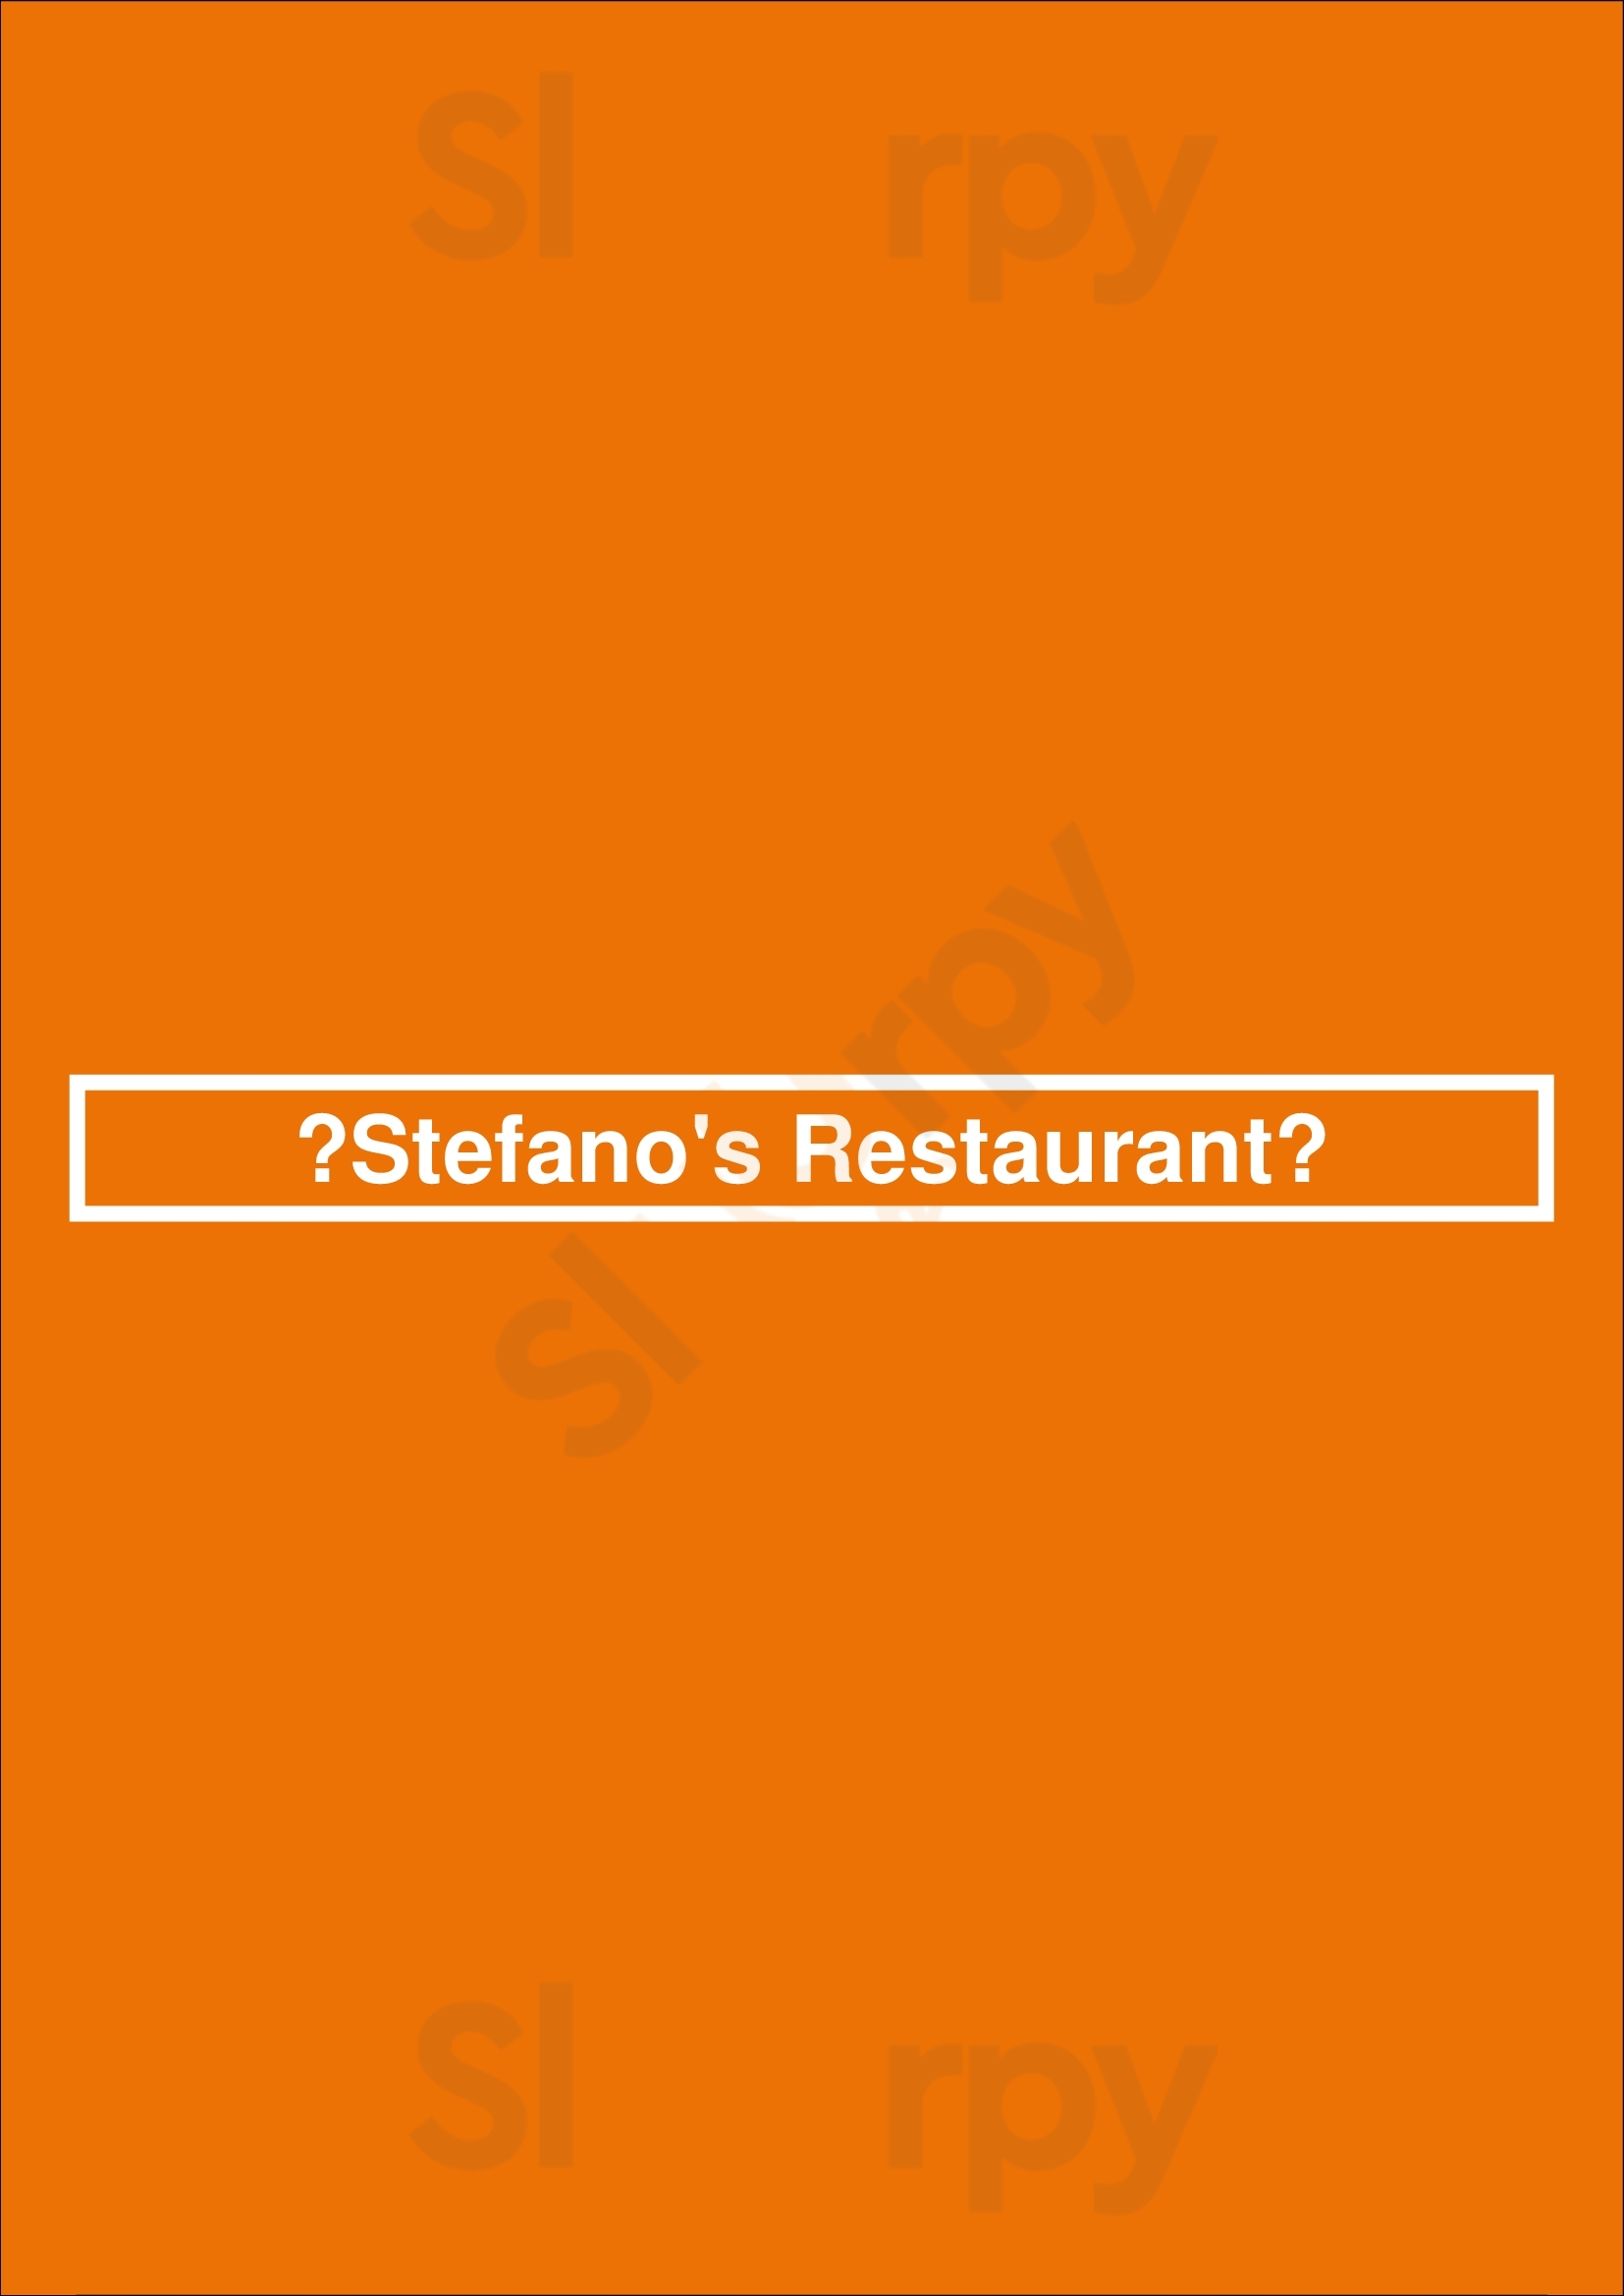 ‪stefano's Restaurant‬ الإسكندرية Menu - 1